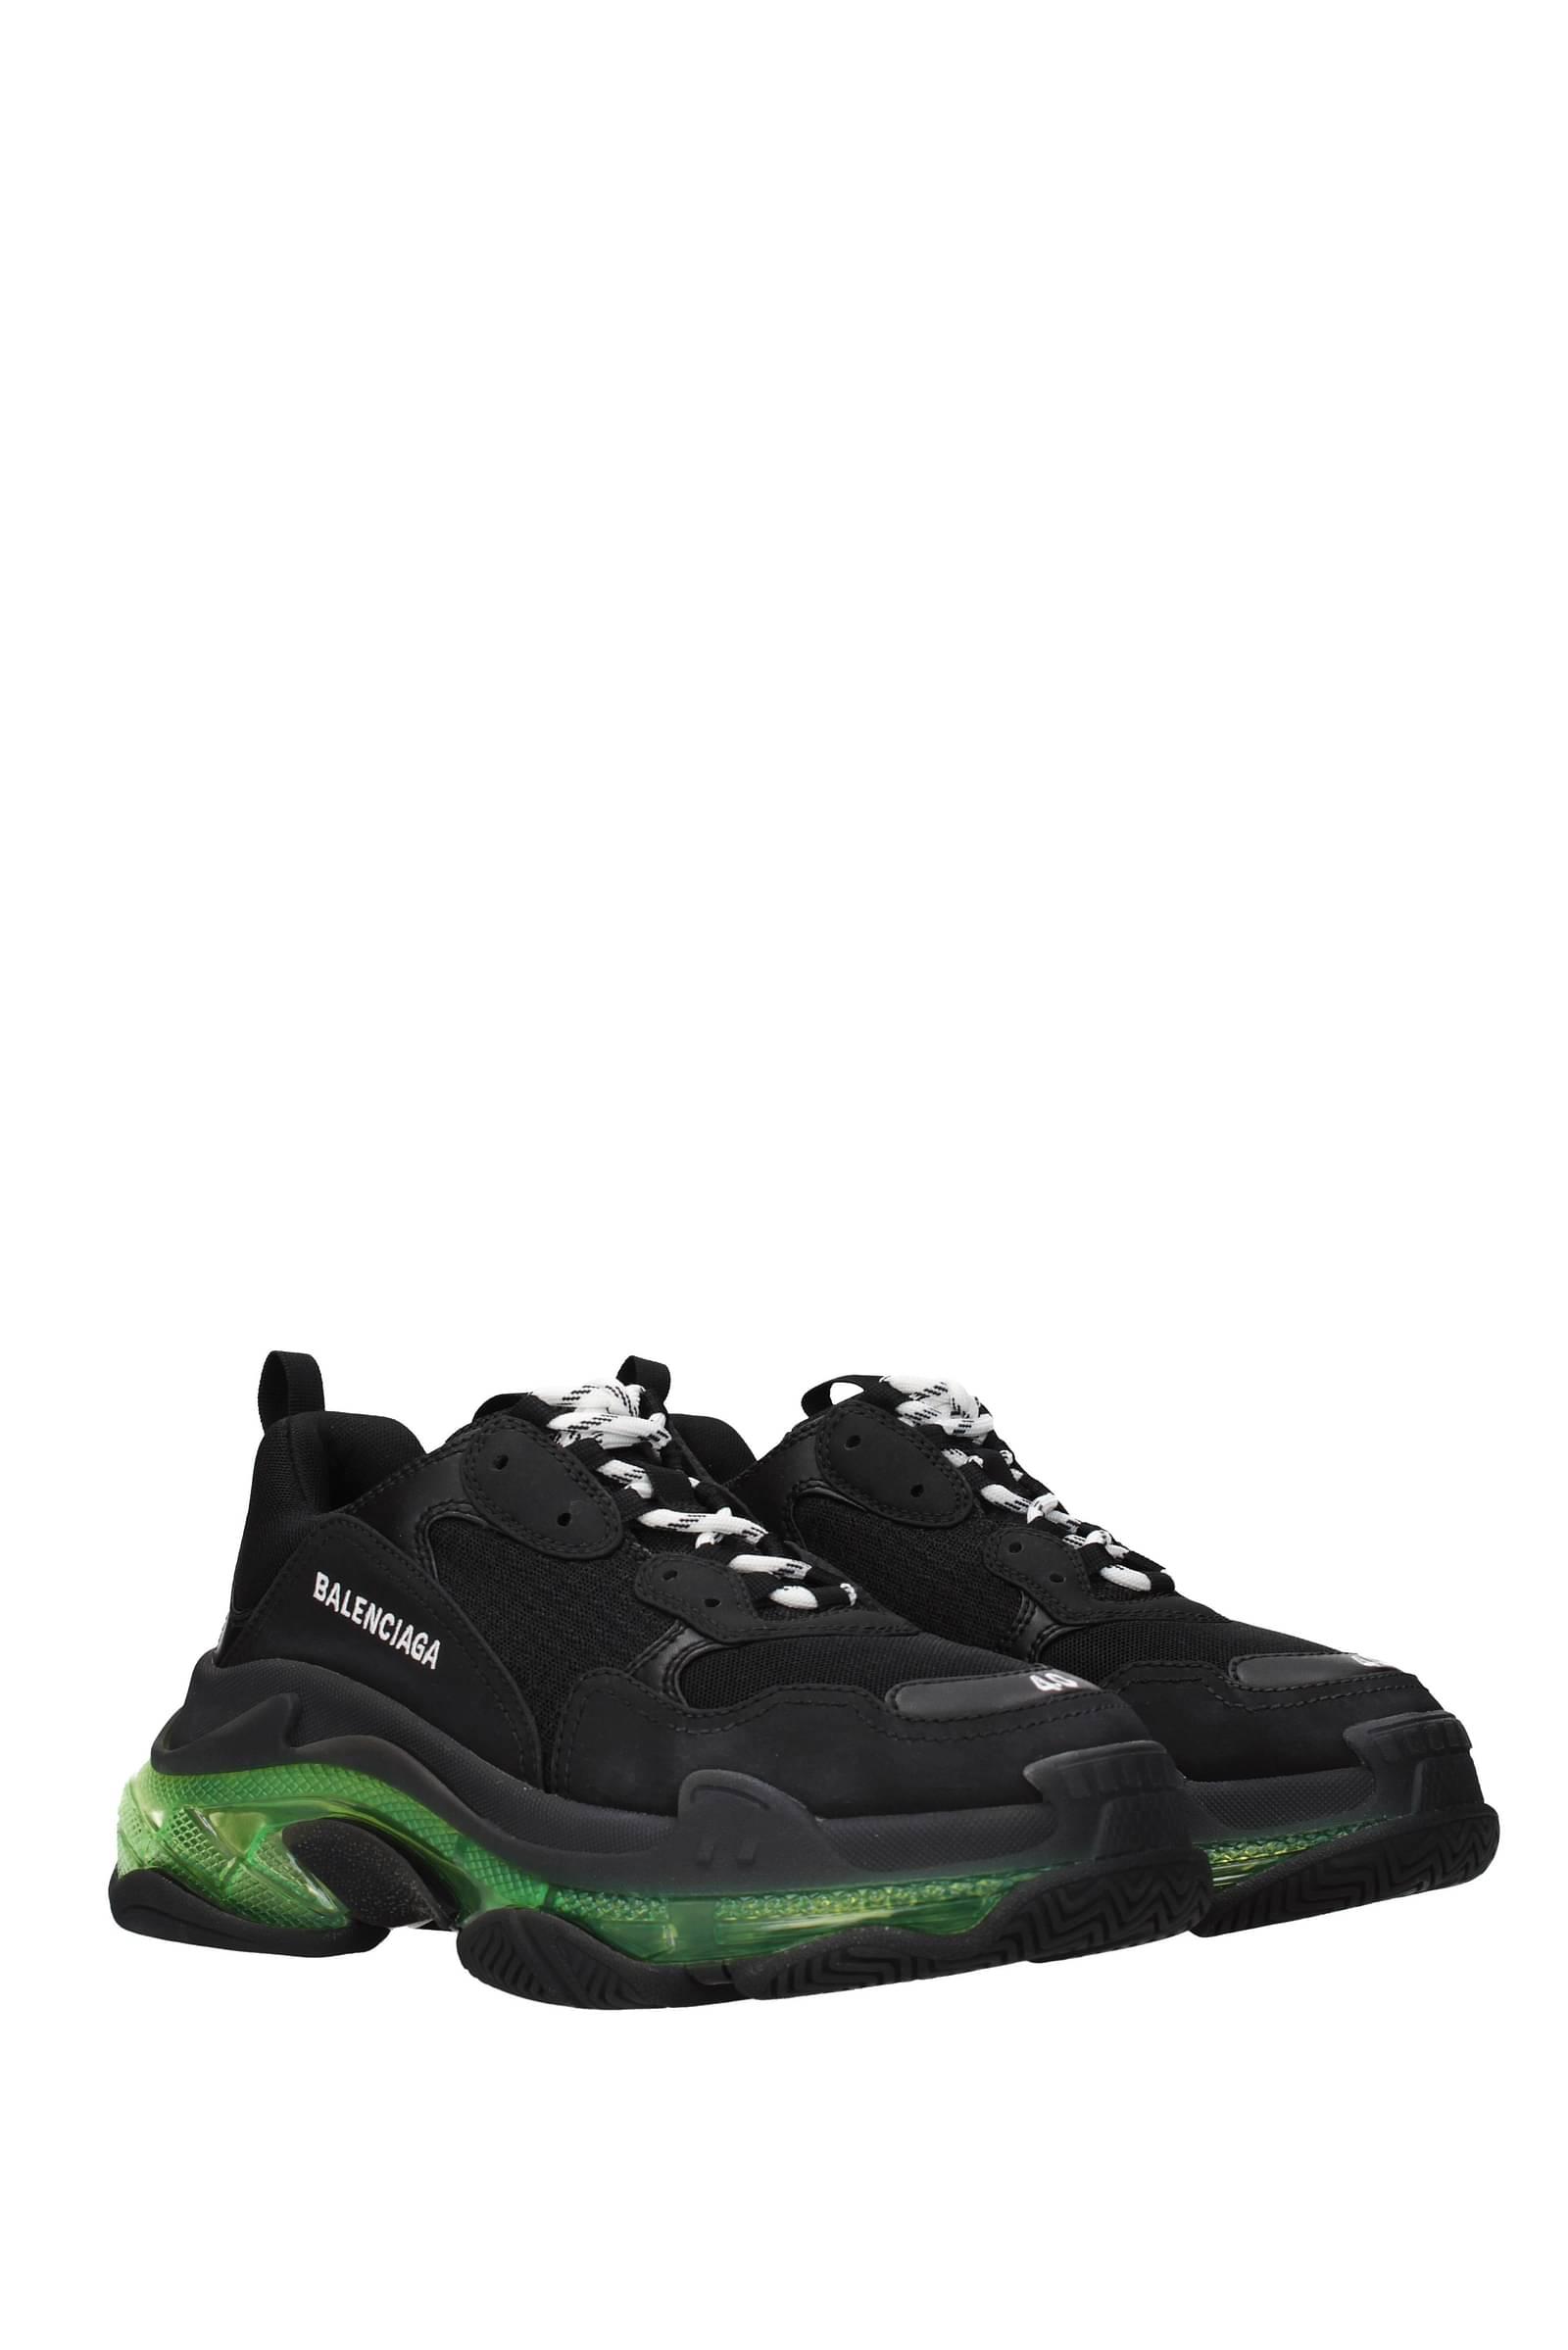 Balenciaga Sneakers Triple S Fabric Black Fluo Green for Men | Lyst